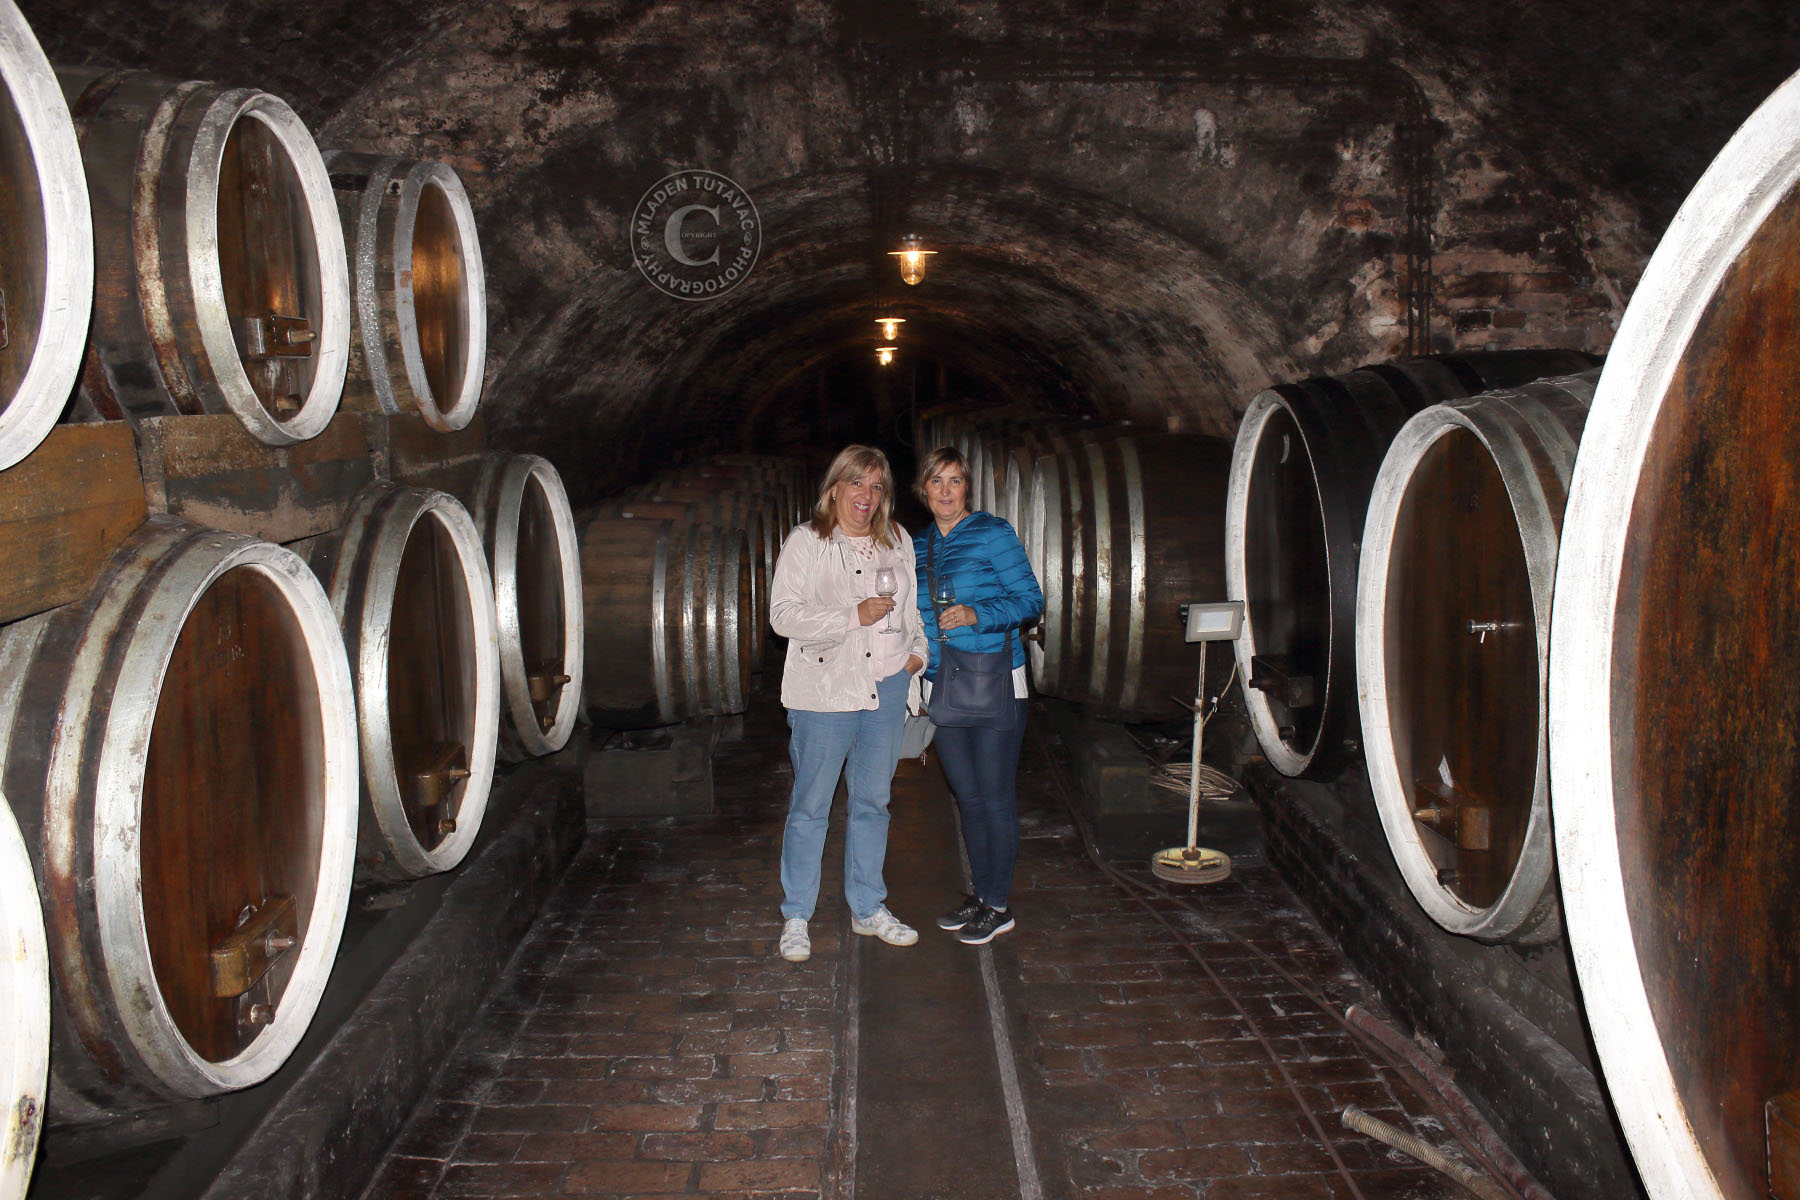 tour guide:Ilok - Old cellar